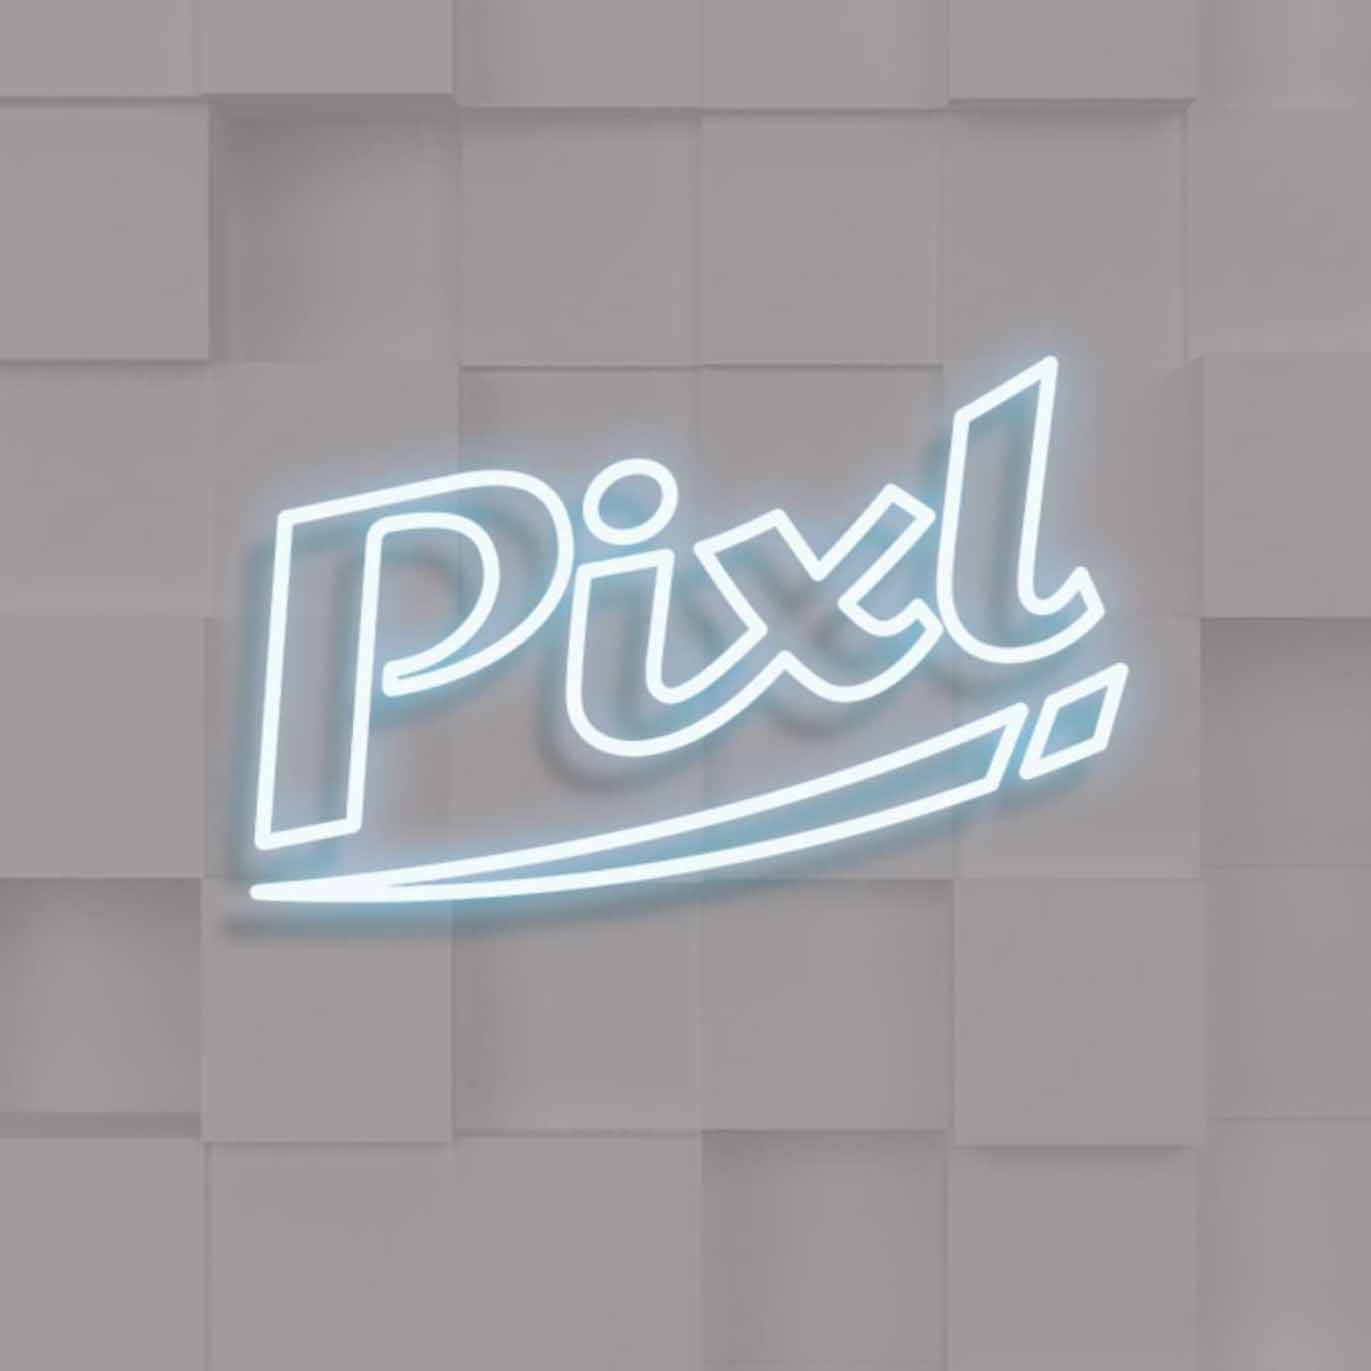 Pixl logo neon sign on wall